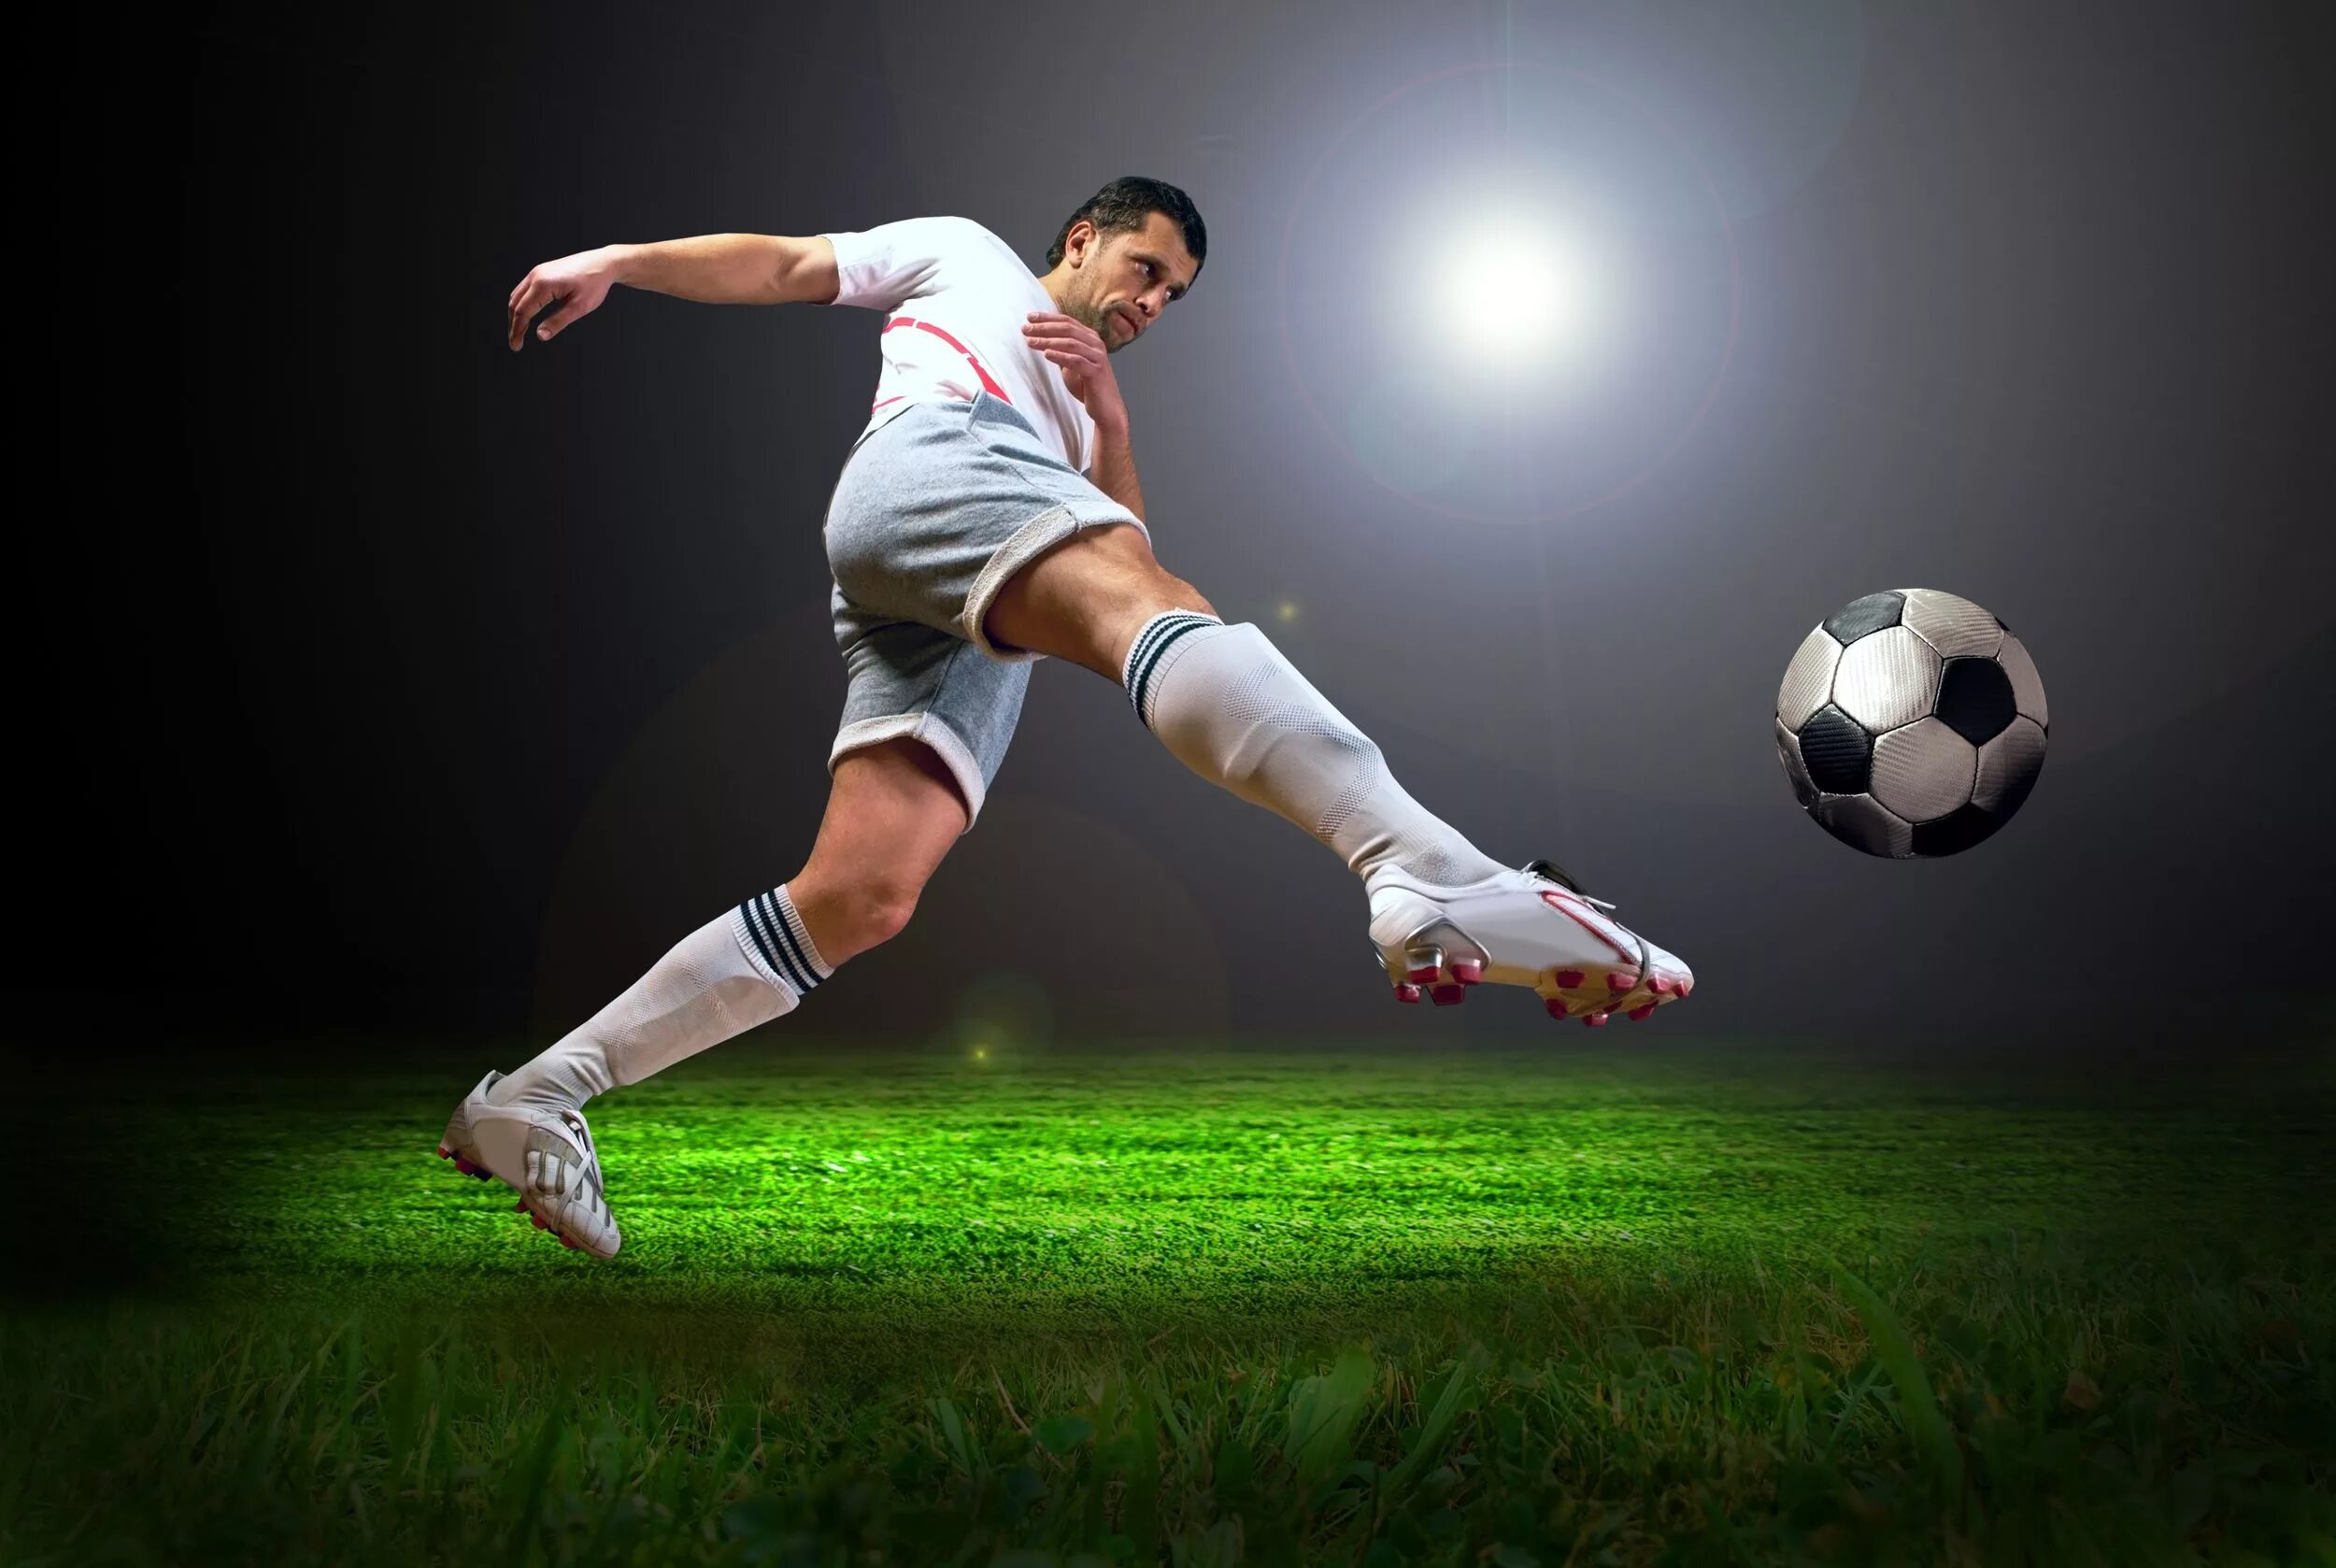 Футбол картинки. Футболист с мячом. Футбольные обои. Ставки на спорт. Играю е футбол